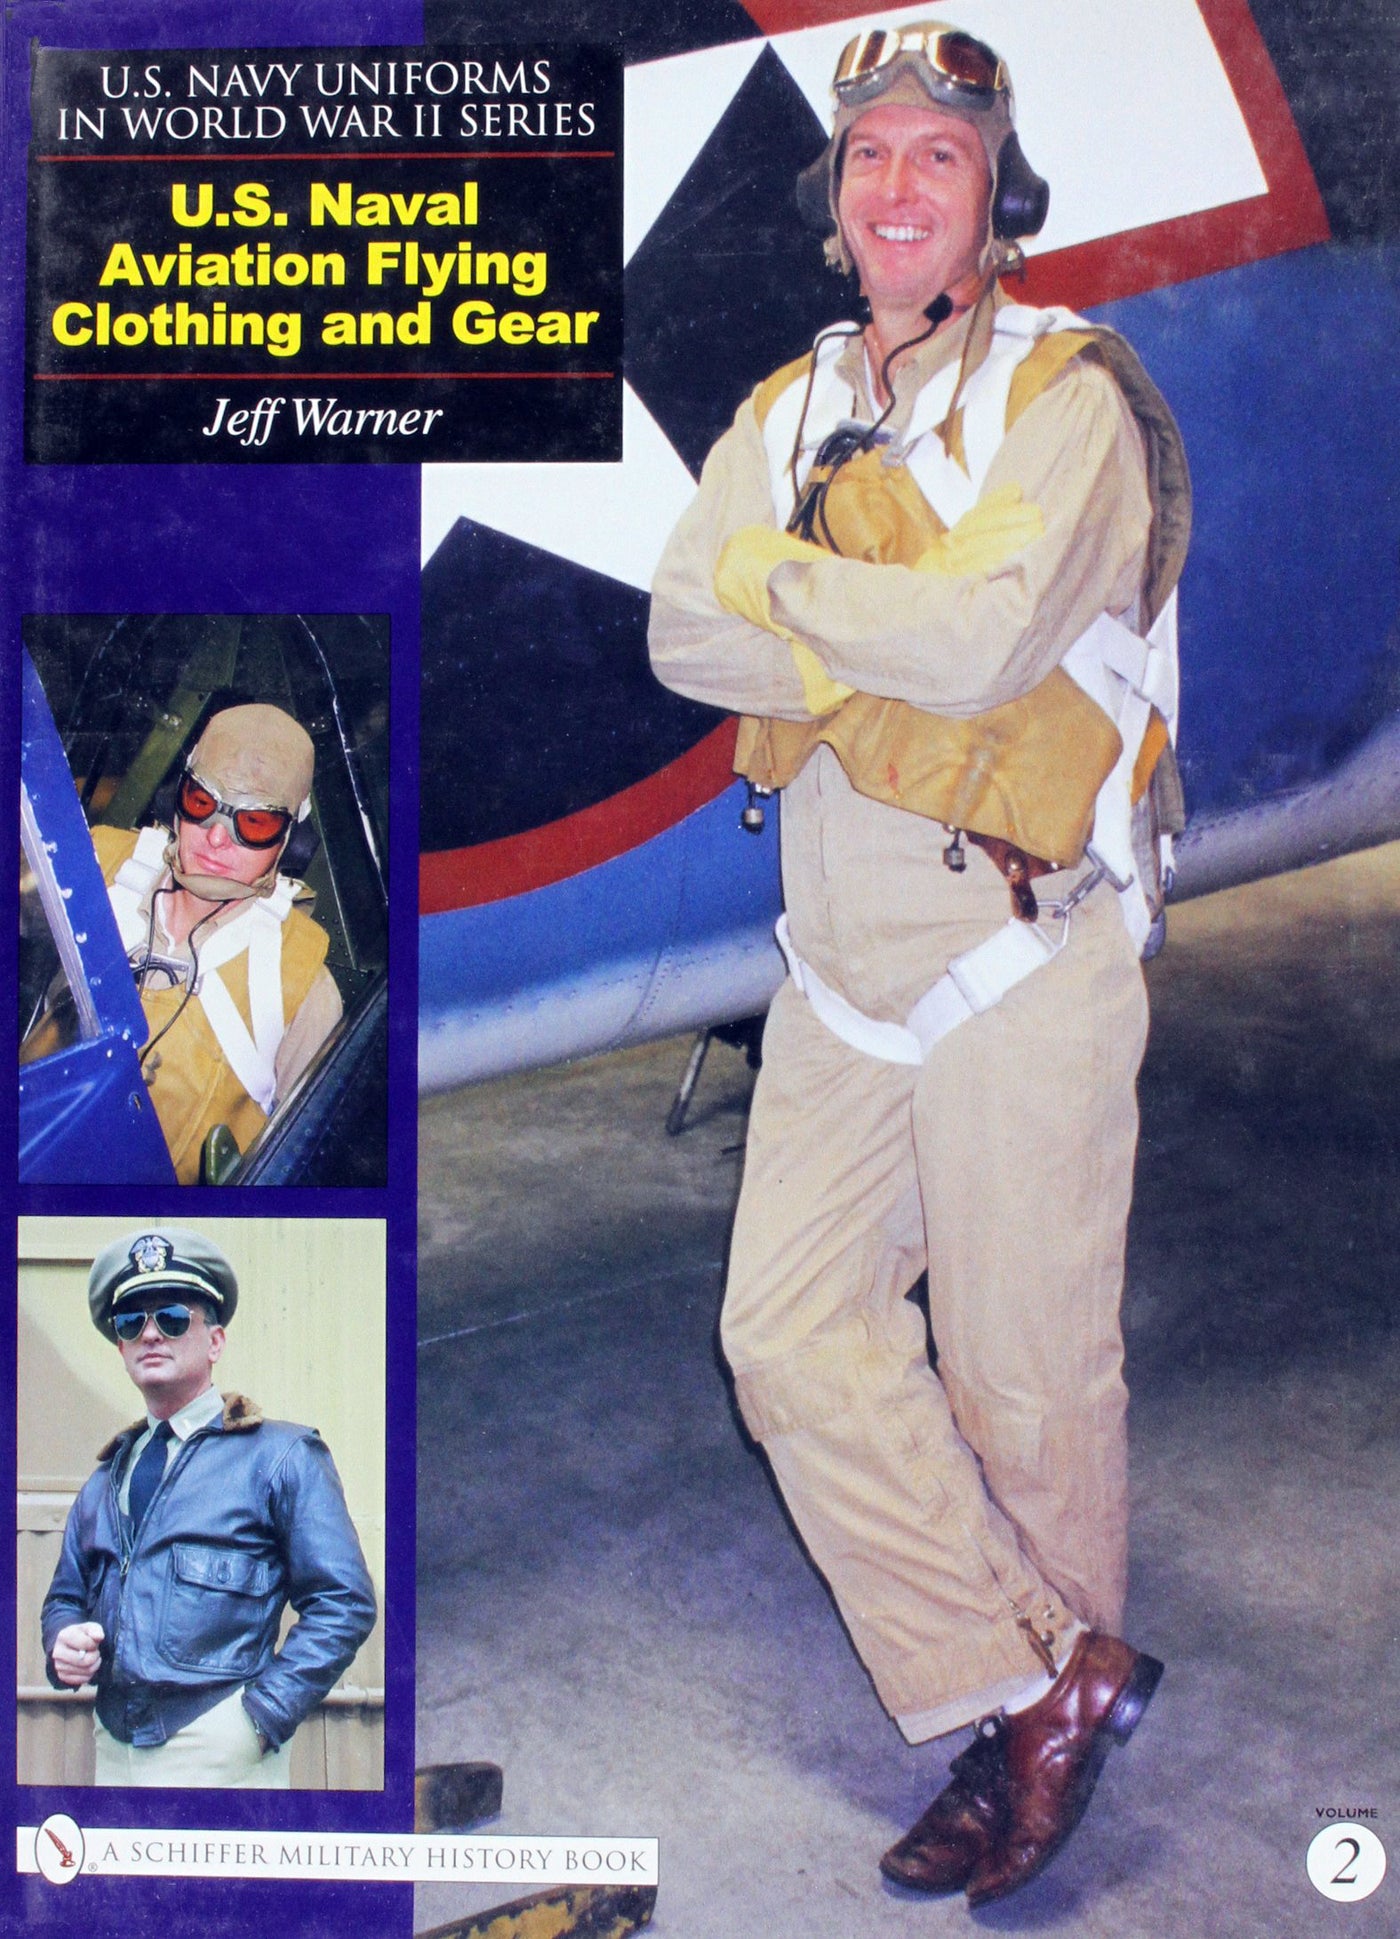 U.S. Navy Uniforms in World War II Series: U.S. Naval Aviation Flying Clothing and Gear Vol. 2